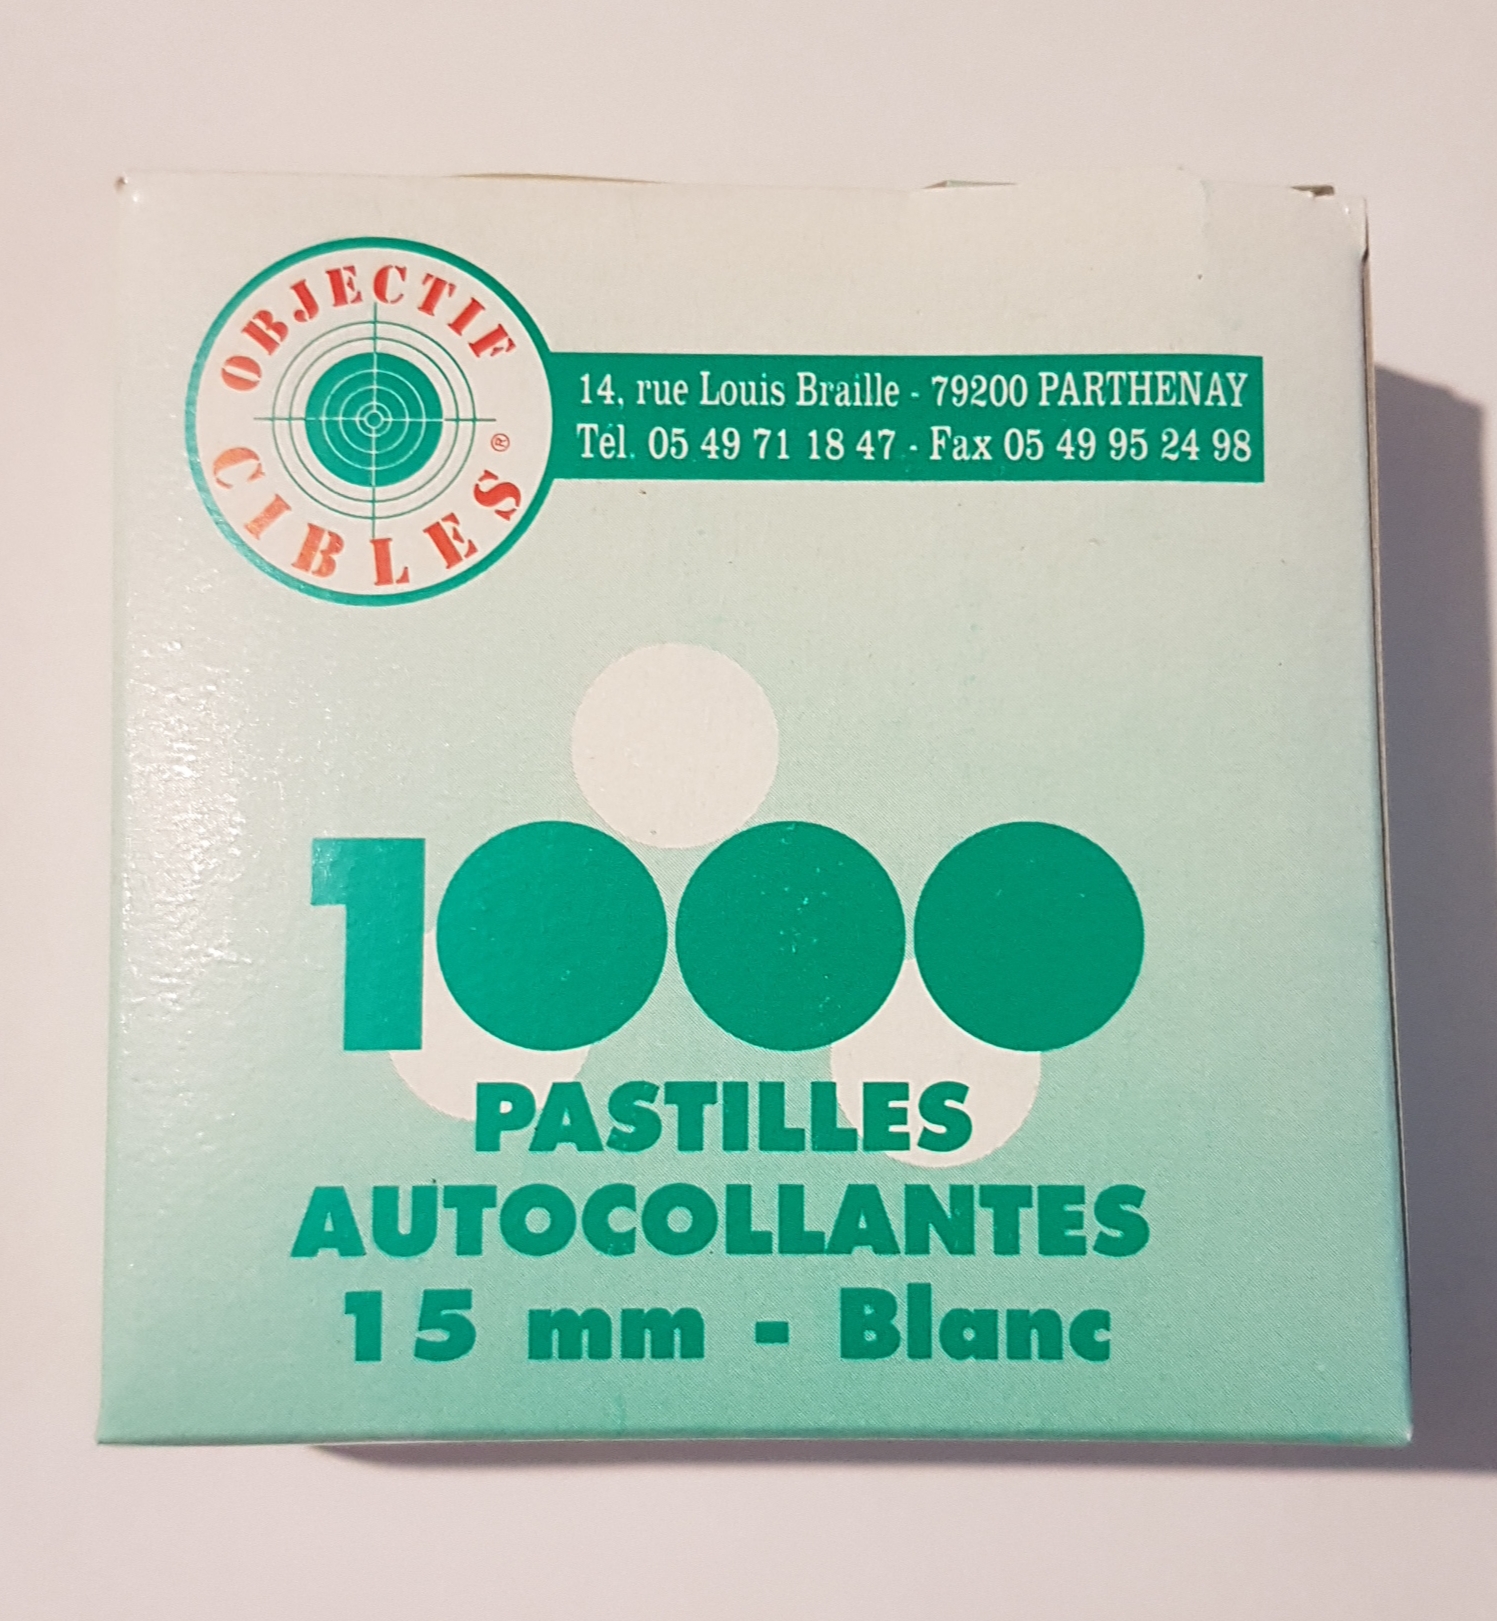 pastilles vertes auto collantes - diametre : 15 mm